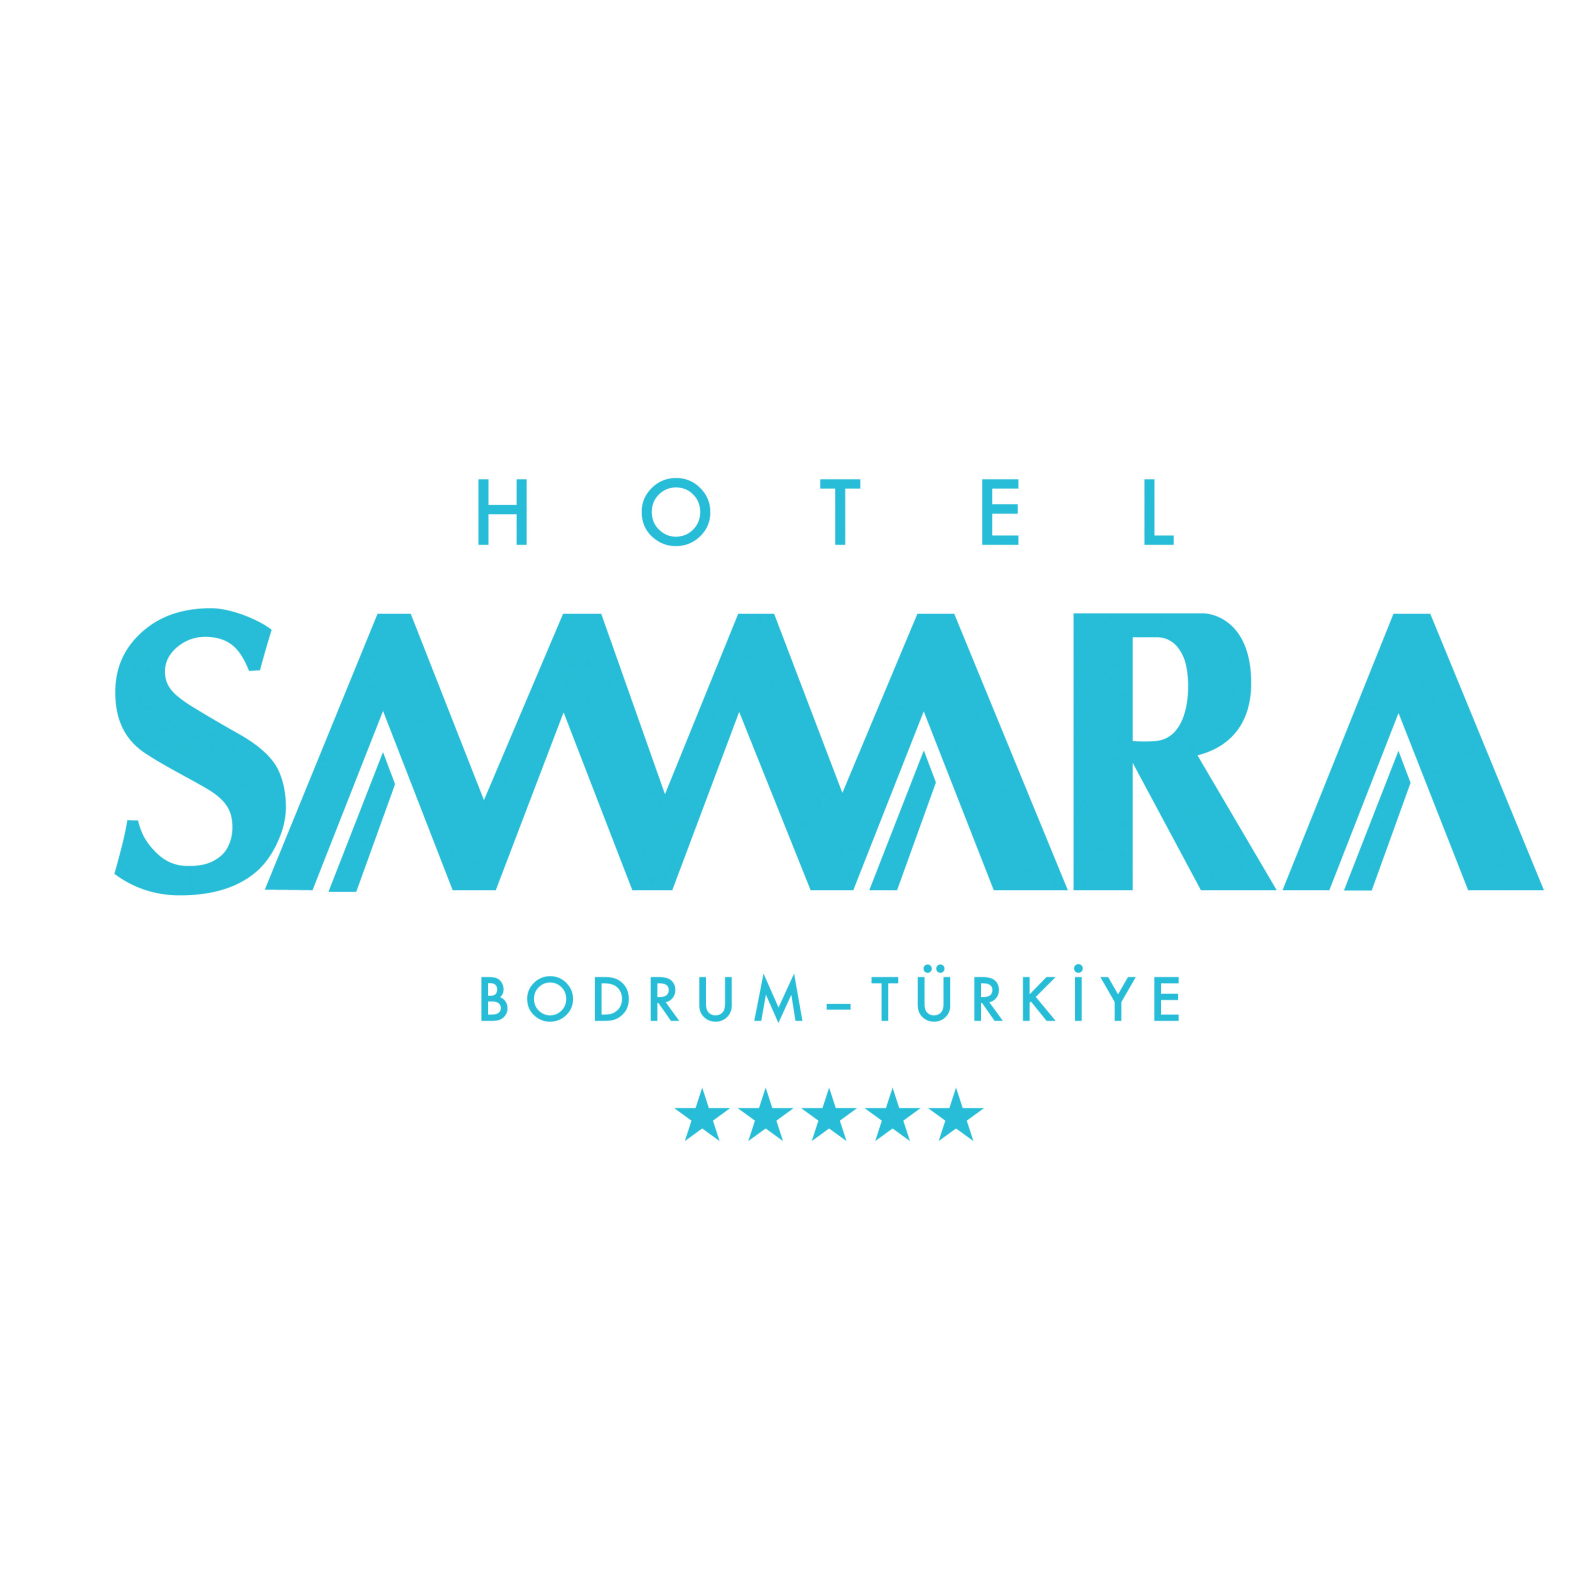 HOTEL SAMARA